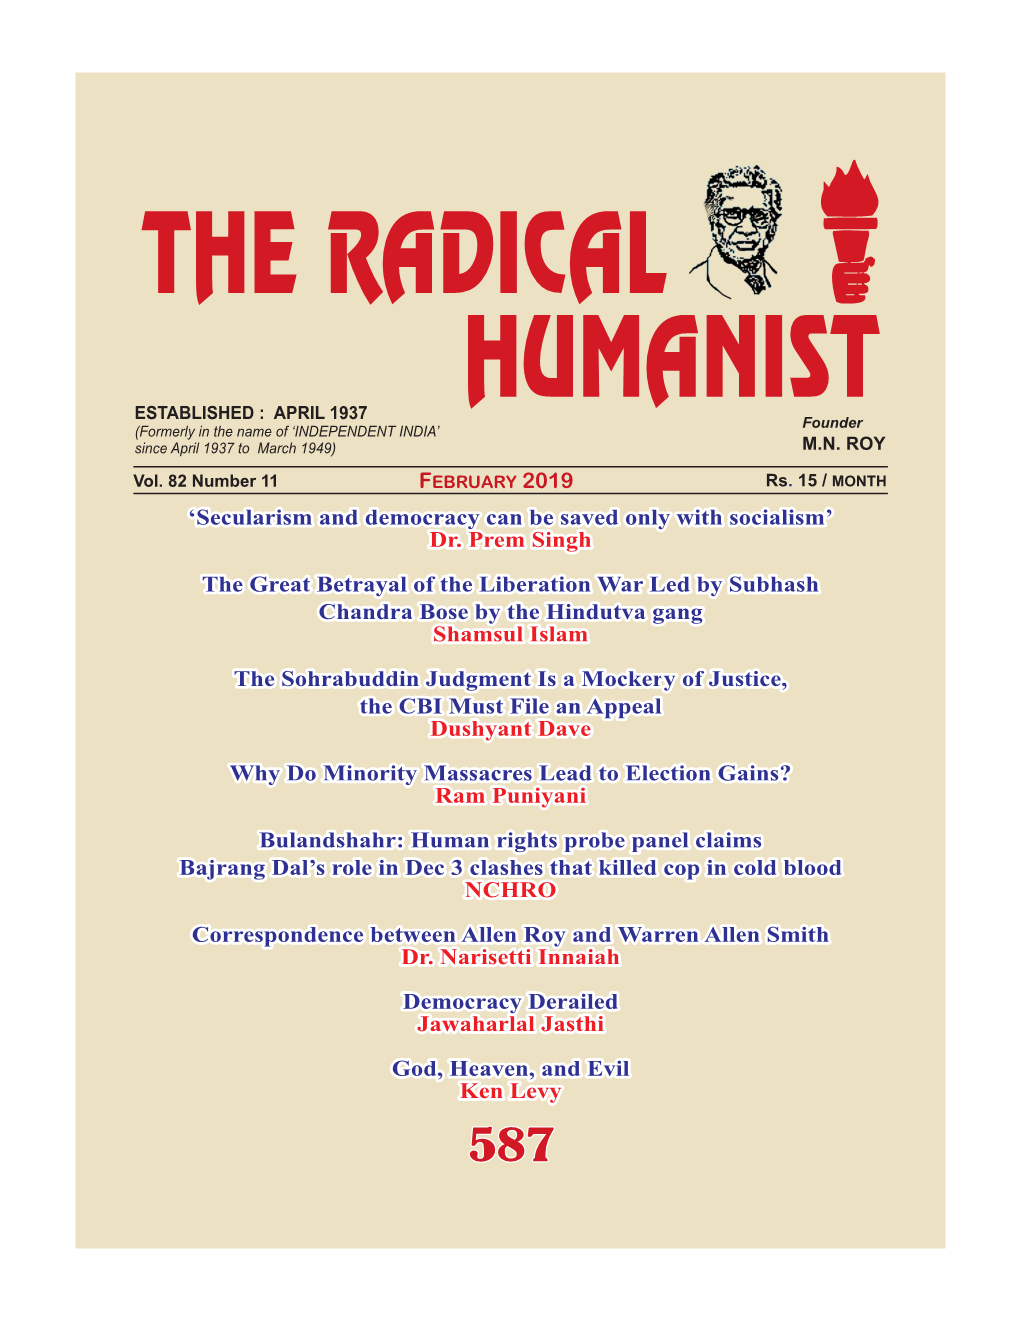 The Radical Humanist To: Democracy Derailed 31 Satish Chandra Varma, Treasurer IRI, Jawaharlal Jasthi A-1/103, Satyam Apartments, Vasundhra Enclave, Delhi- 110096